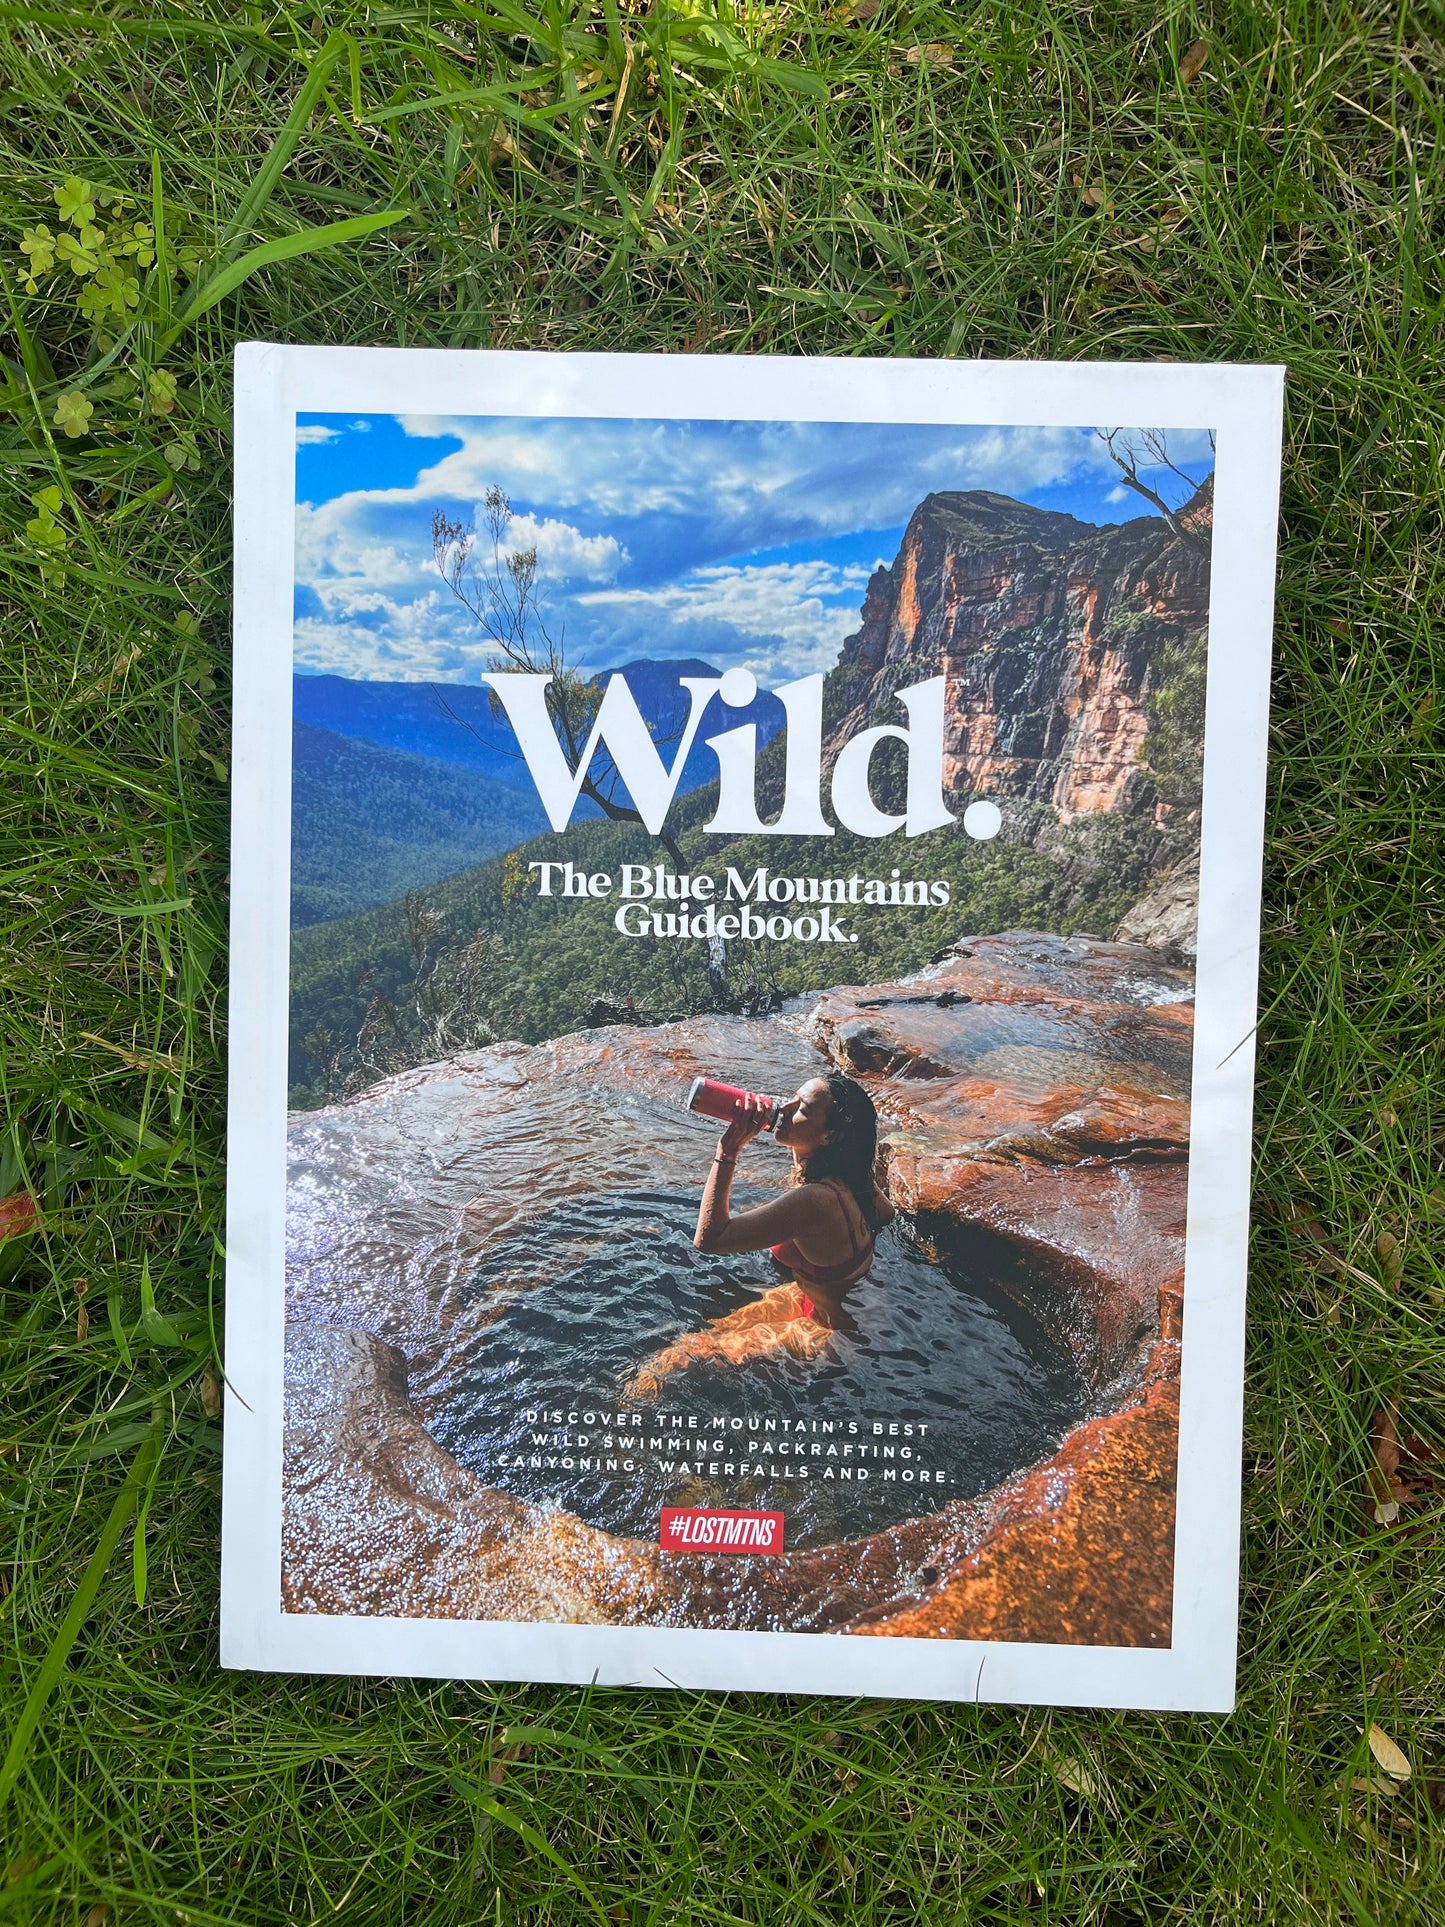 Epic & Wild Blue Mountains Guidebooks